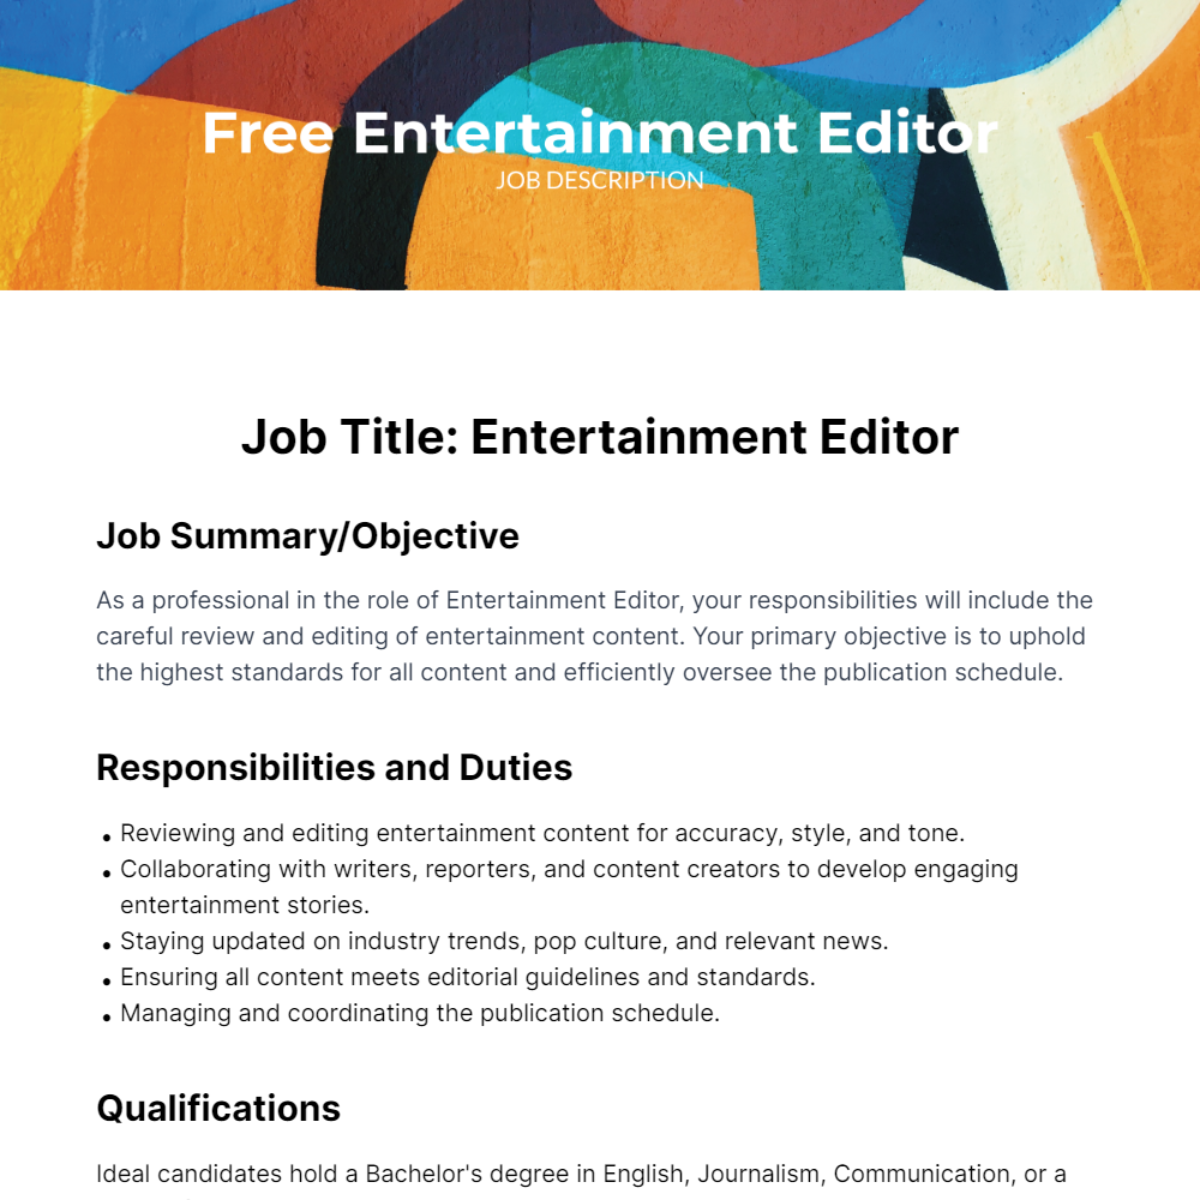 Free Entertainment Editor Job Description Template